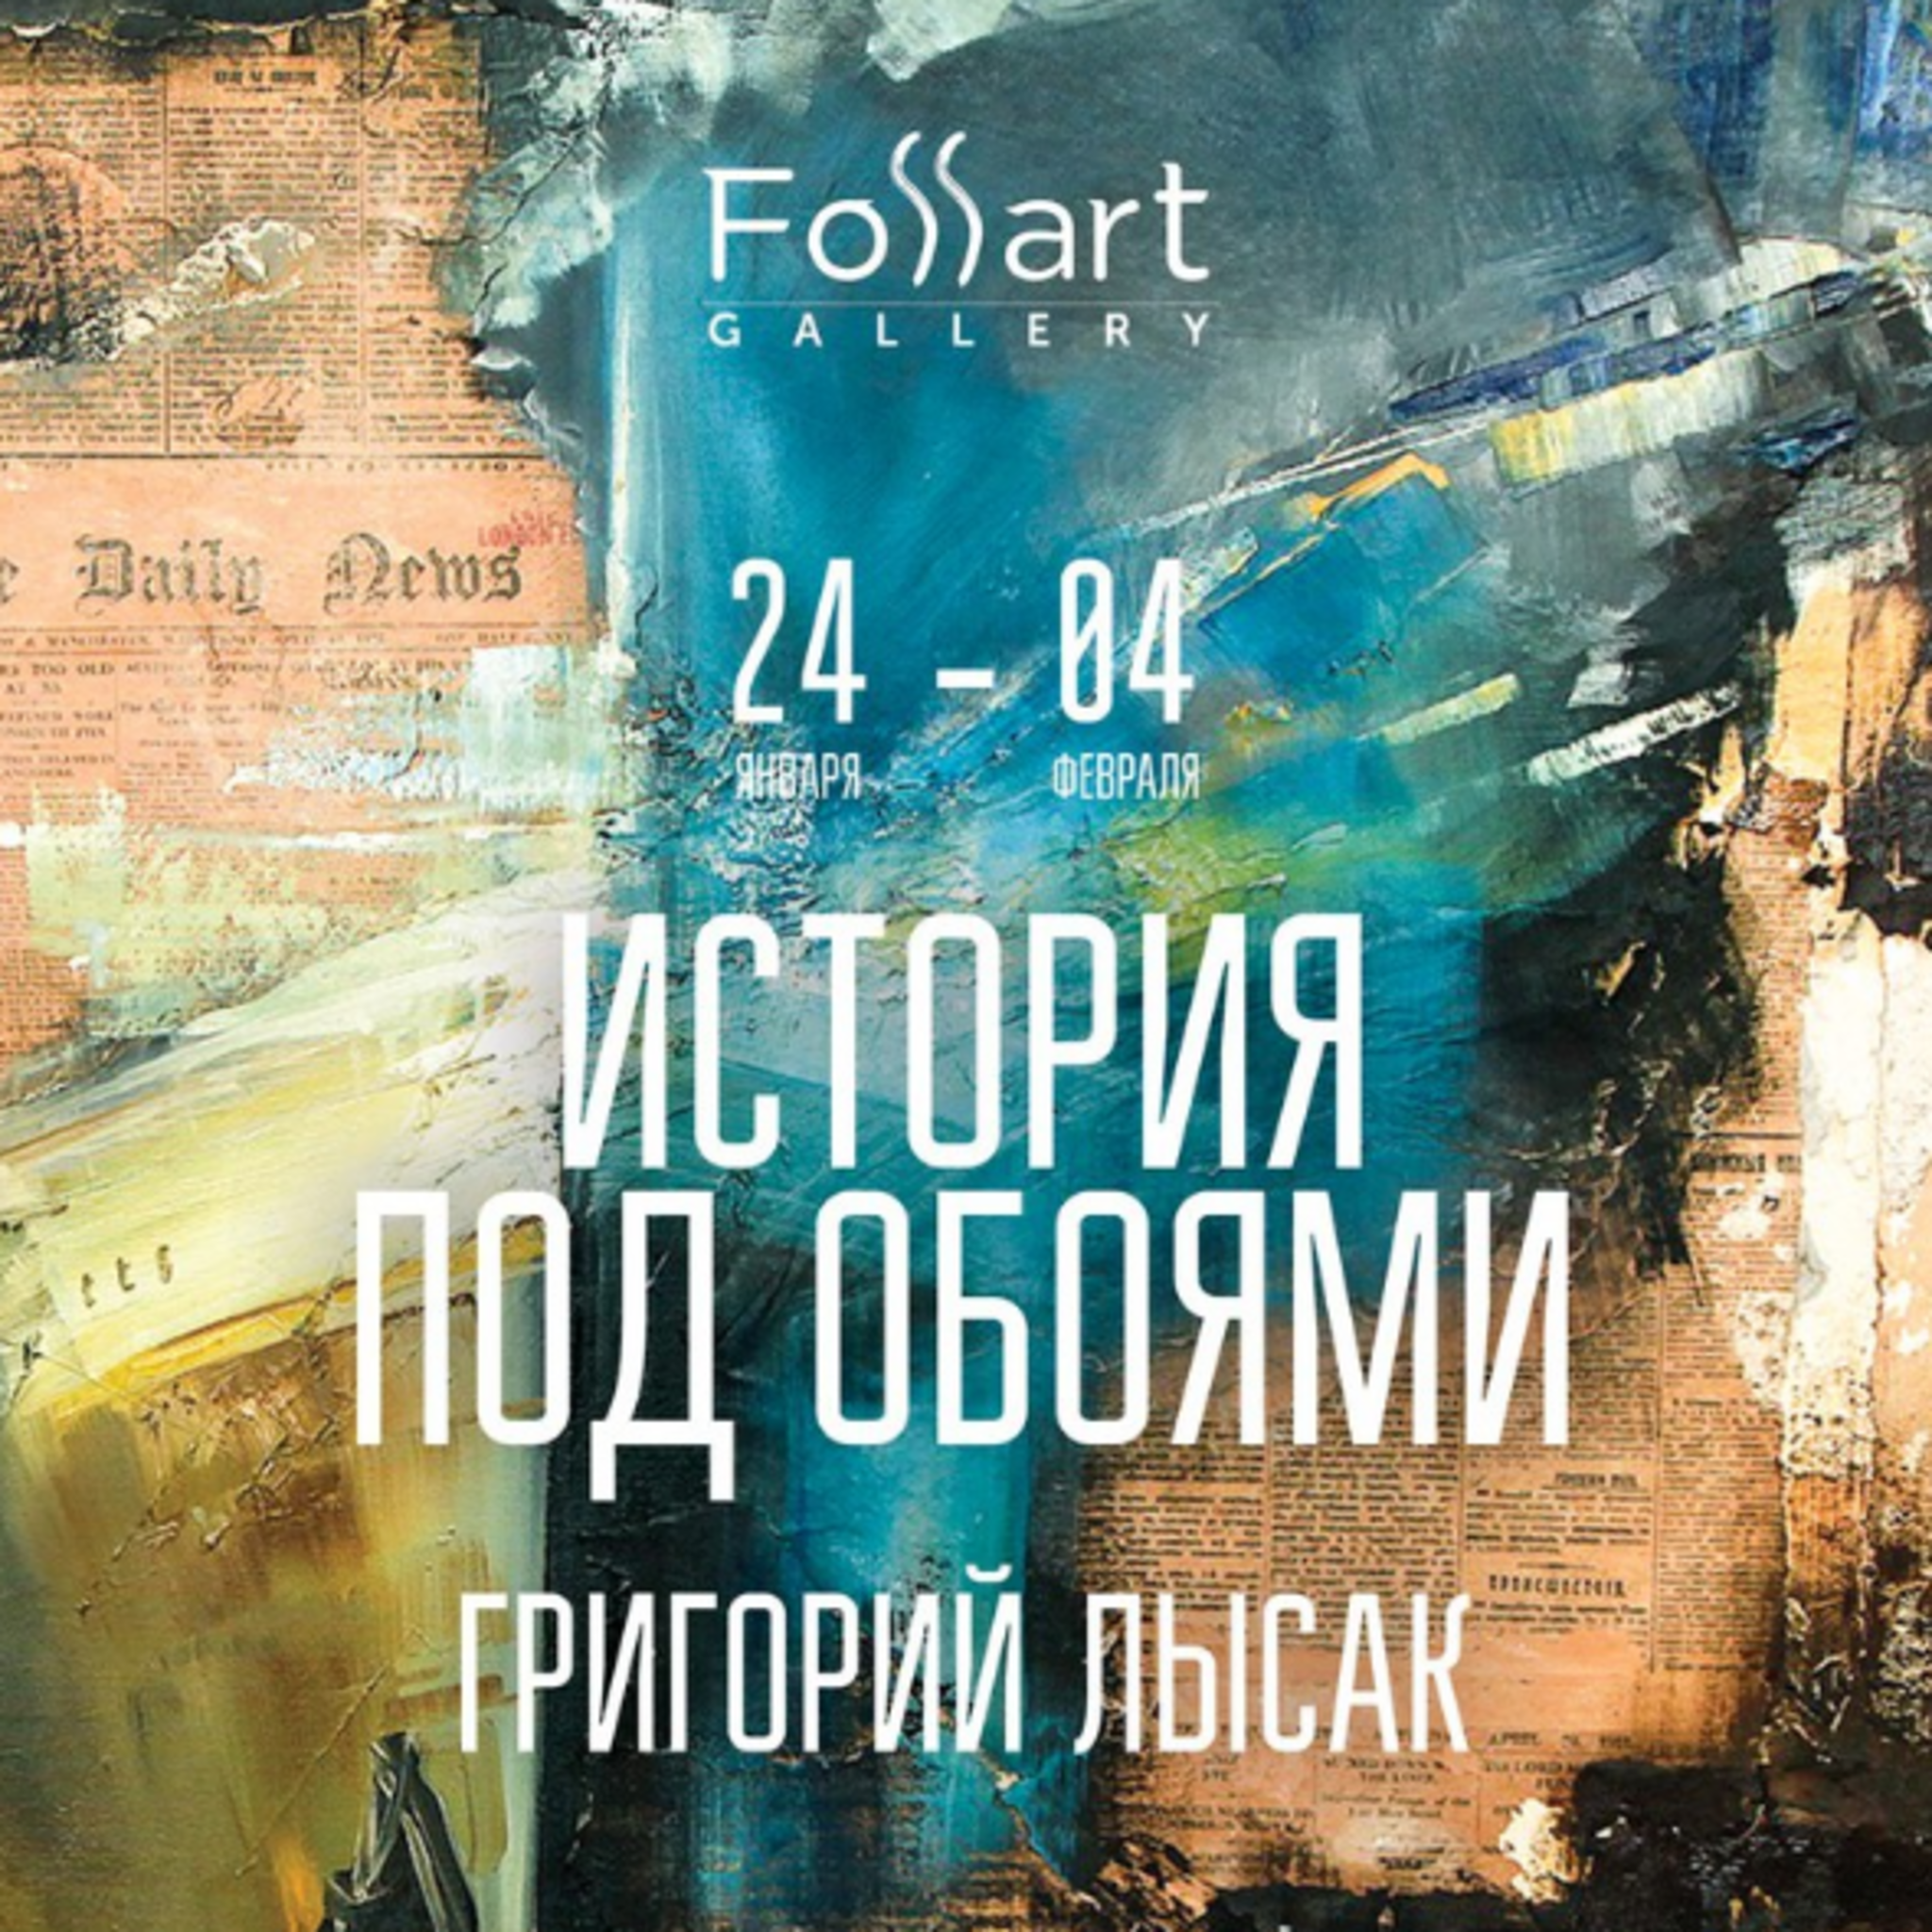 Gregory Lysak exhibition History under the wallpaper